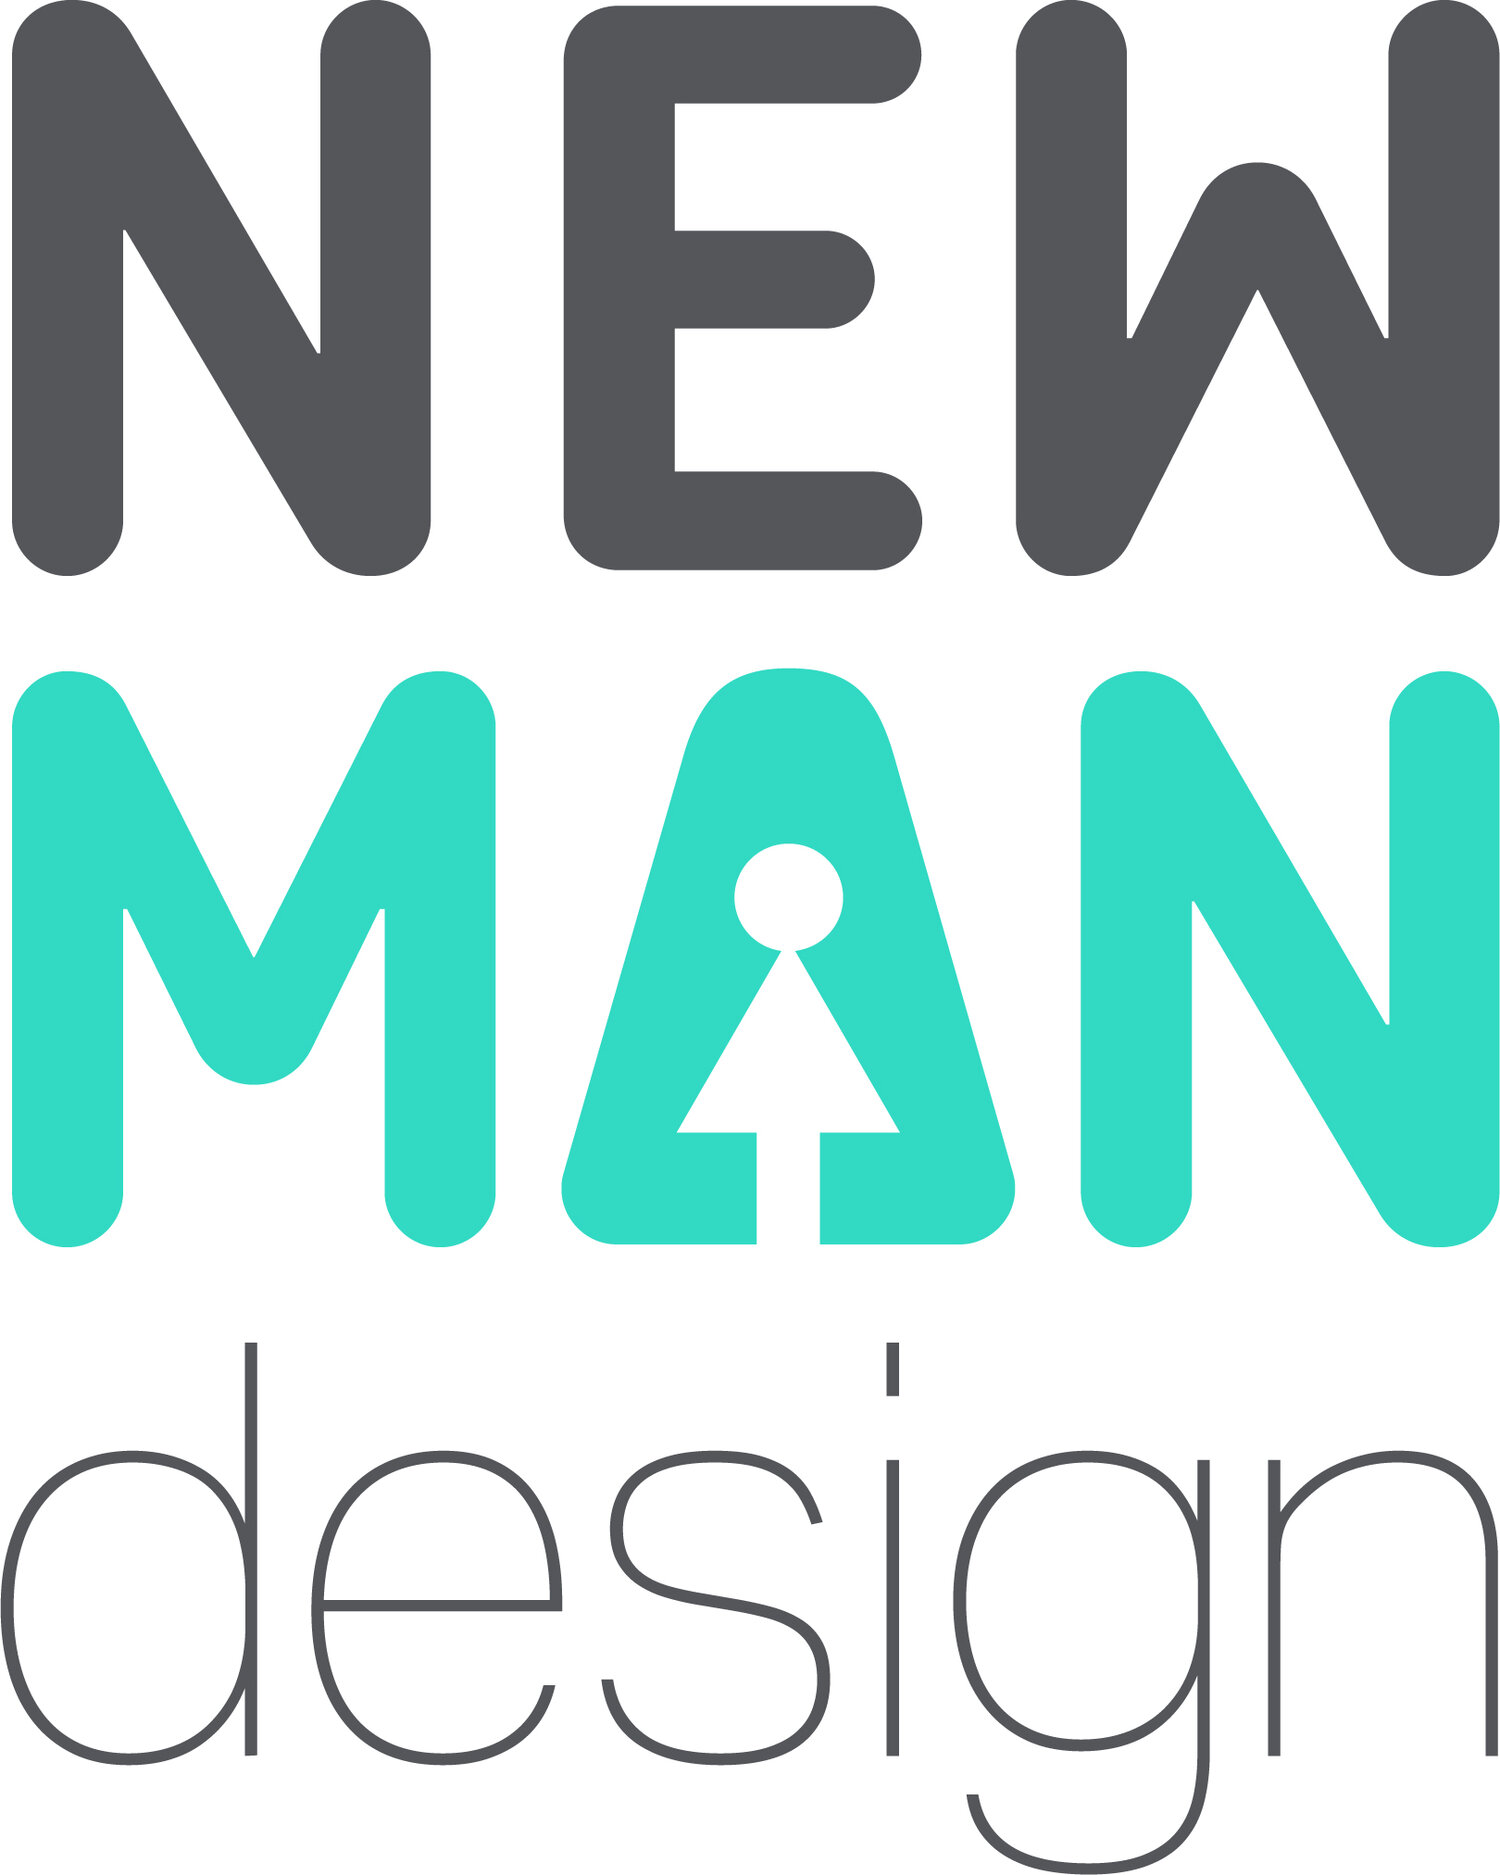 Newman Designs